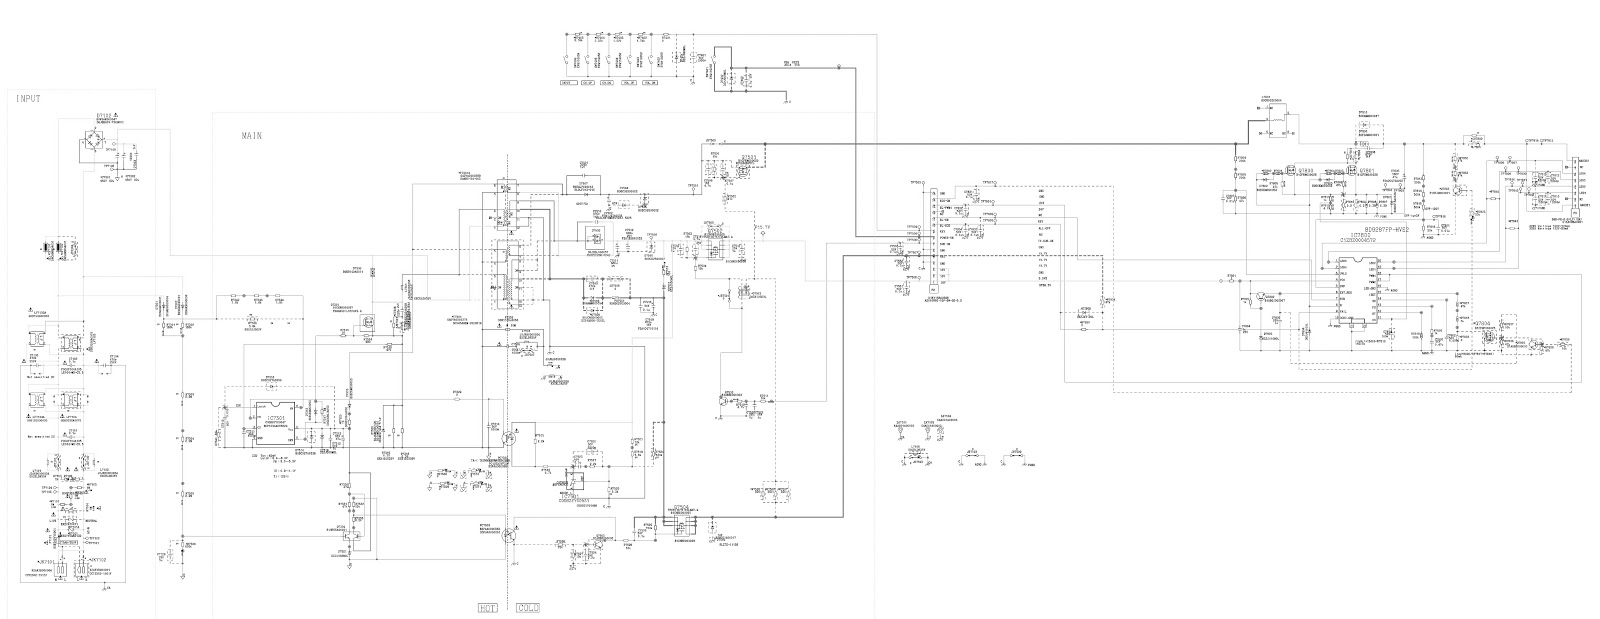 Schematic Diagrams: Panasonic TC L32X5B LCD TV - TNPA 5596 – SMPS